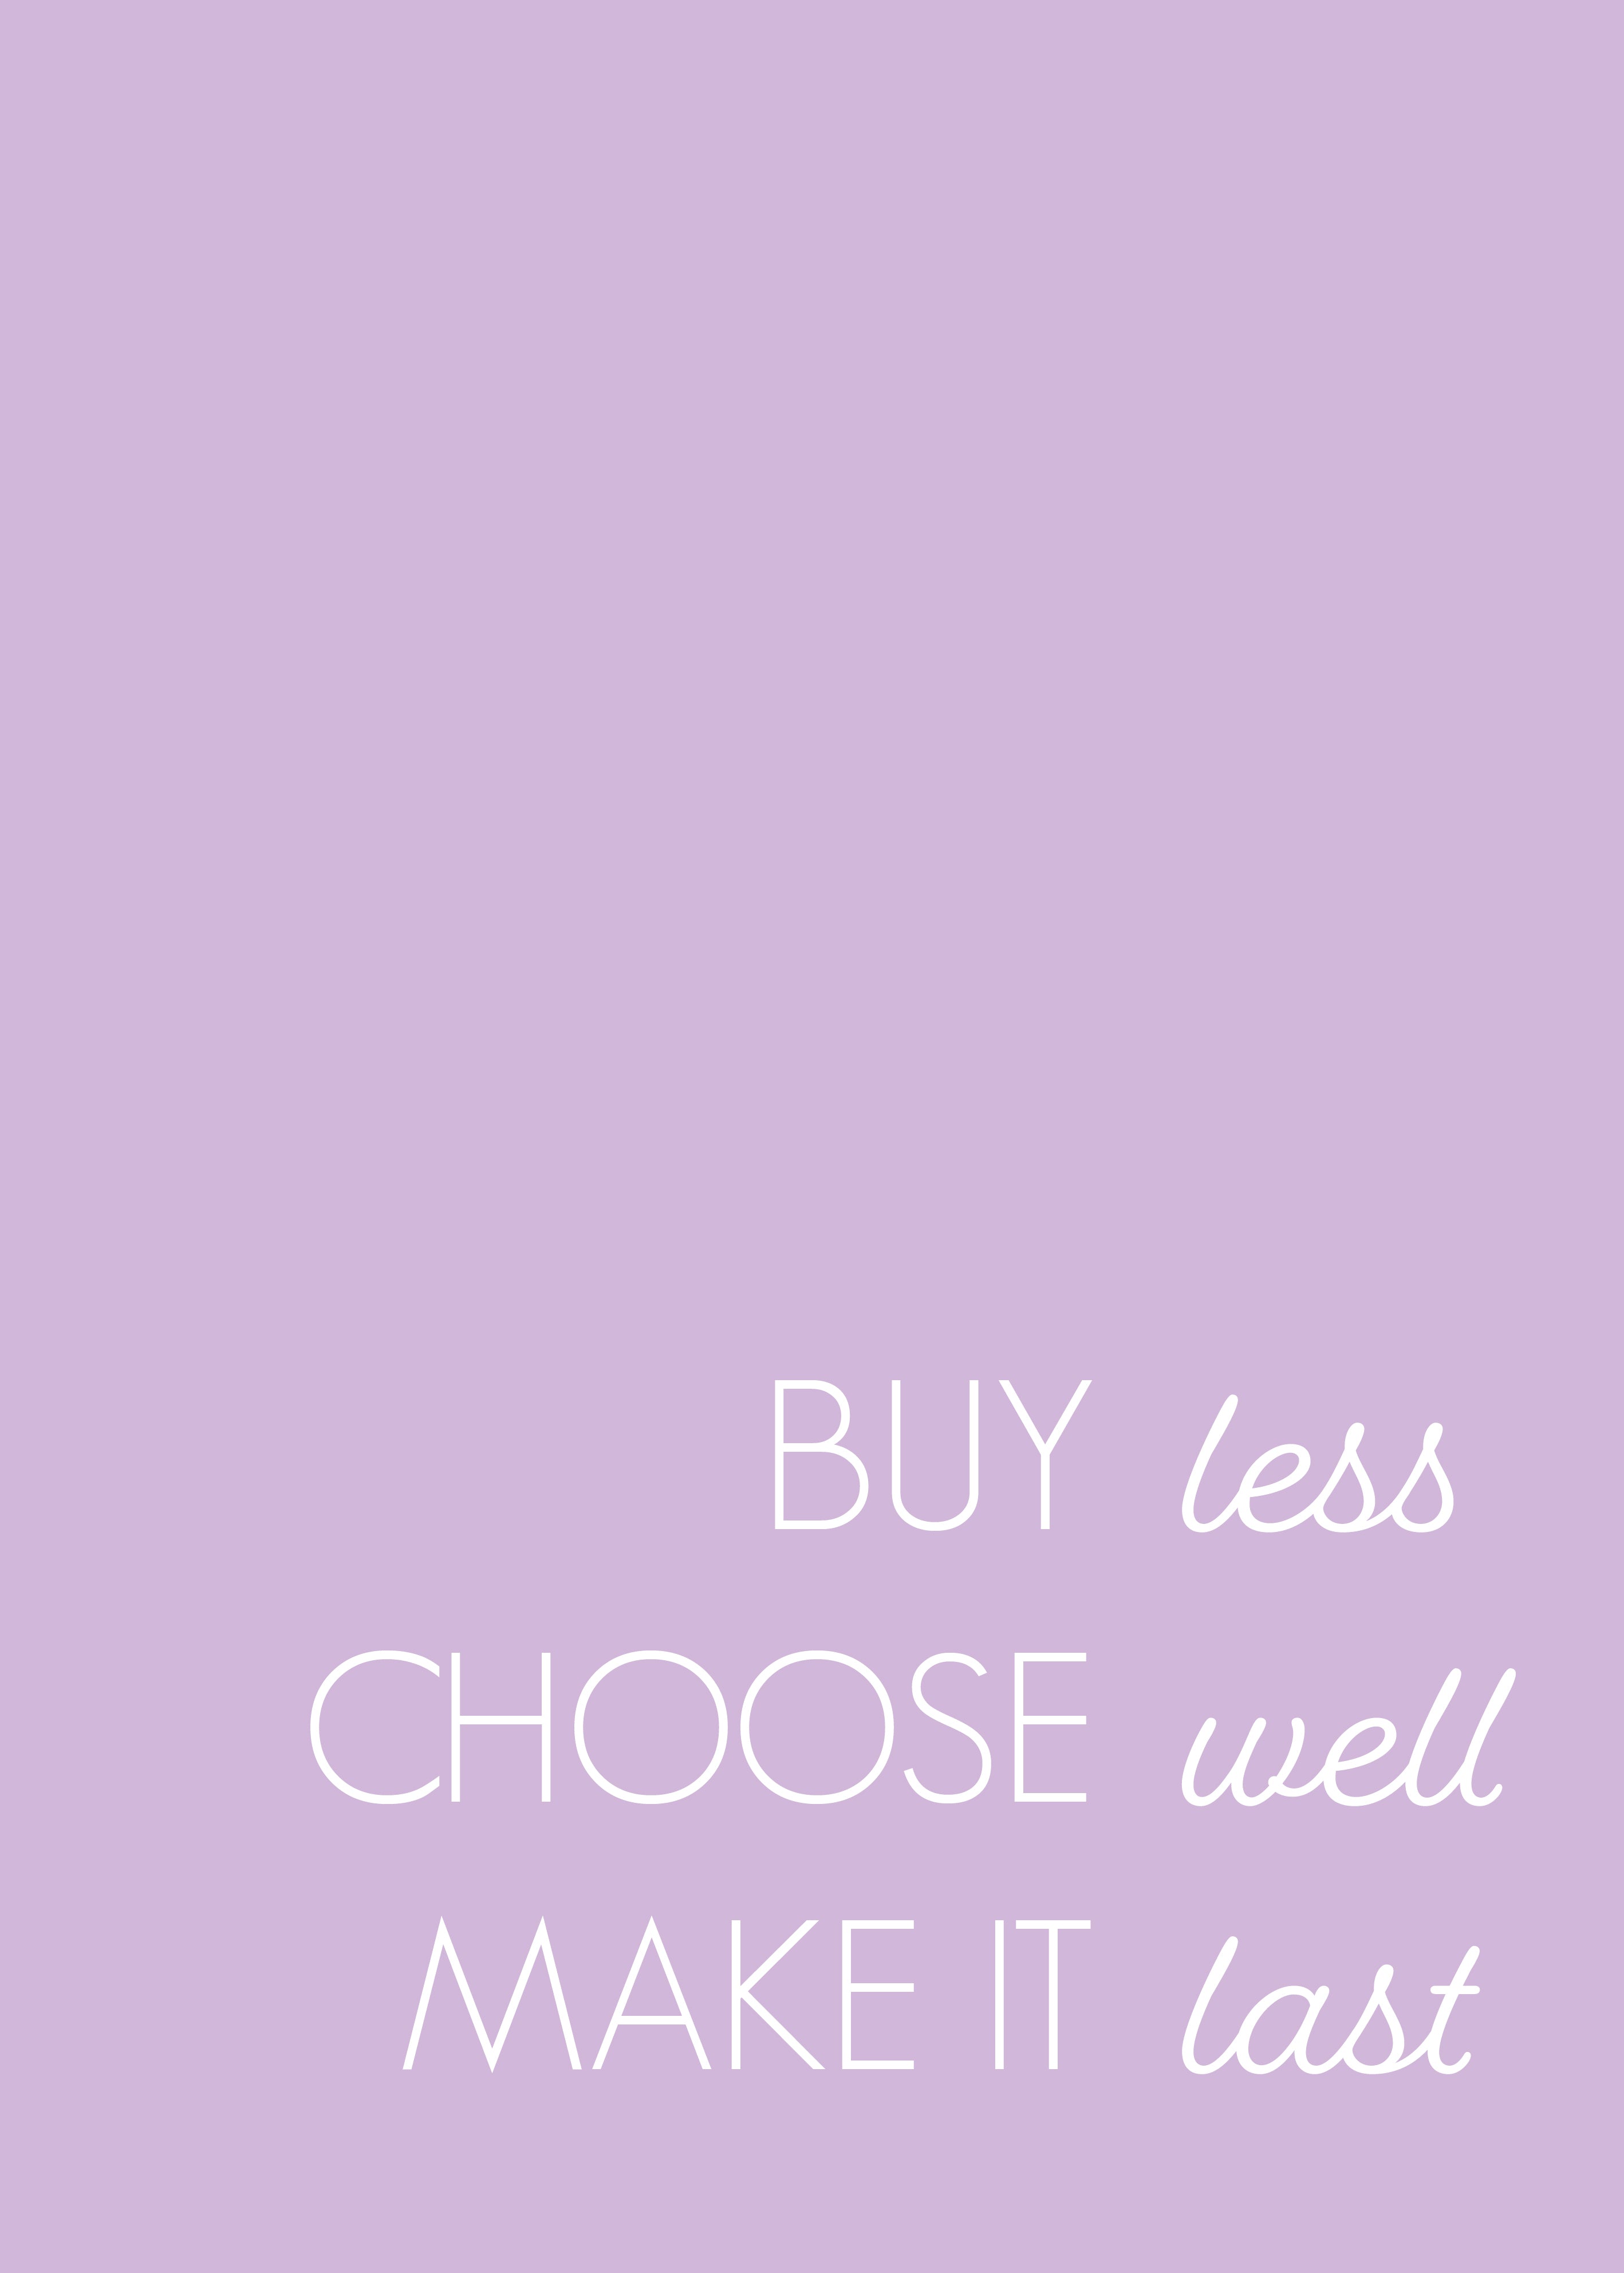 Buy less, choose well, make it last